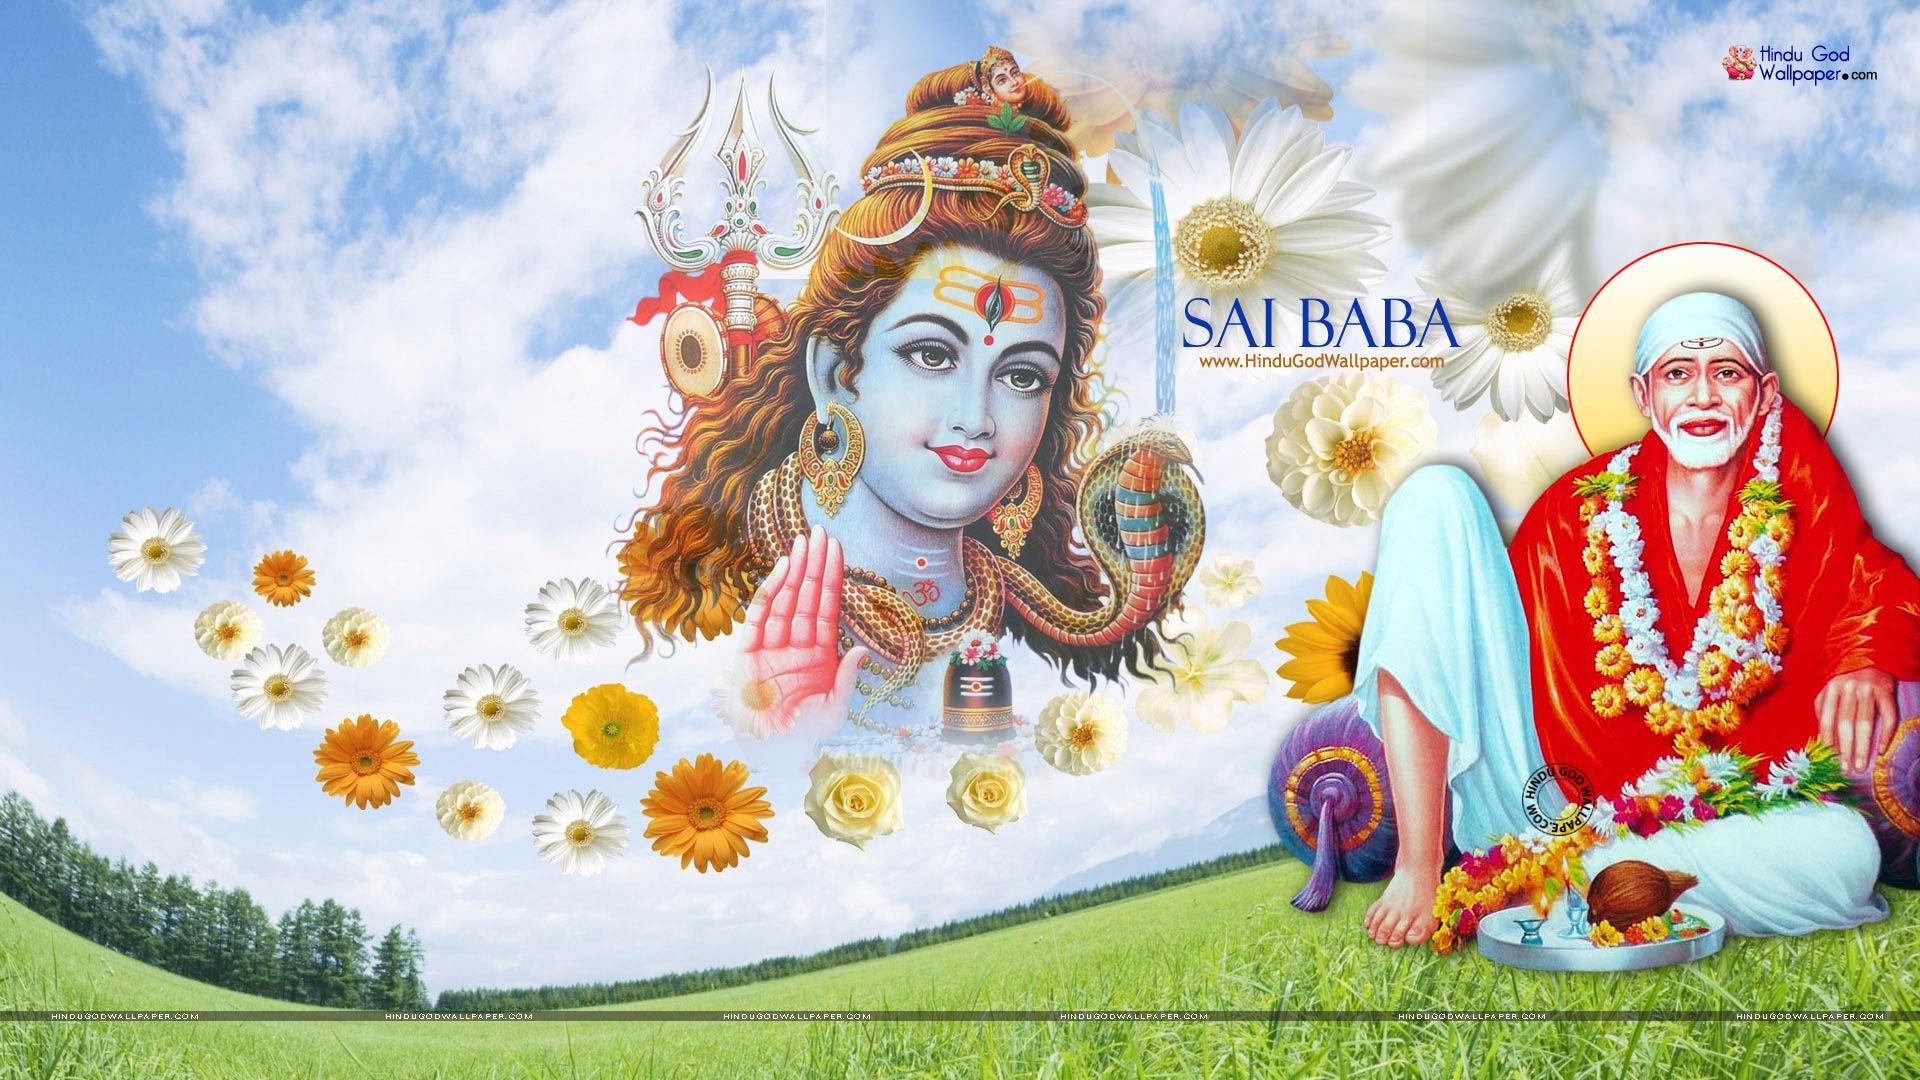 1080p Sai Baba HD Wallpapers Image Full Size Free Download